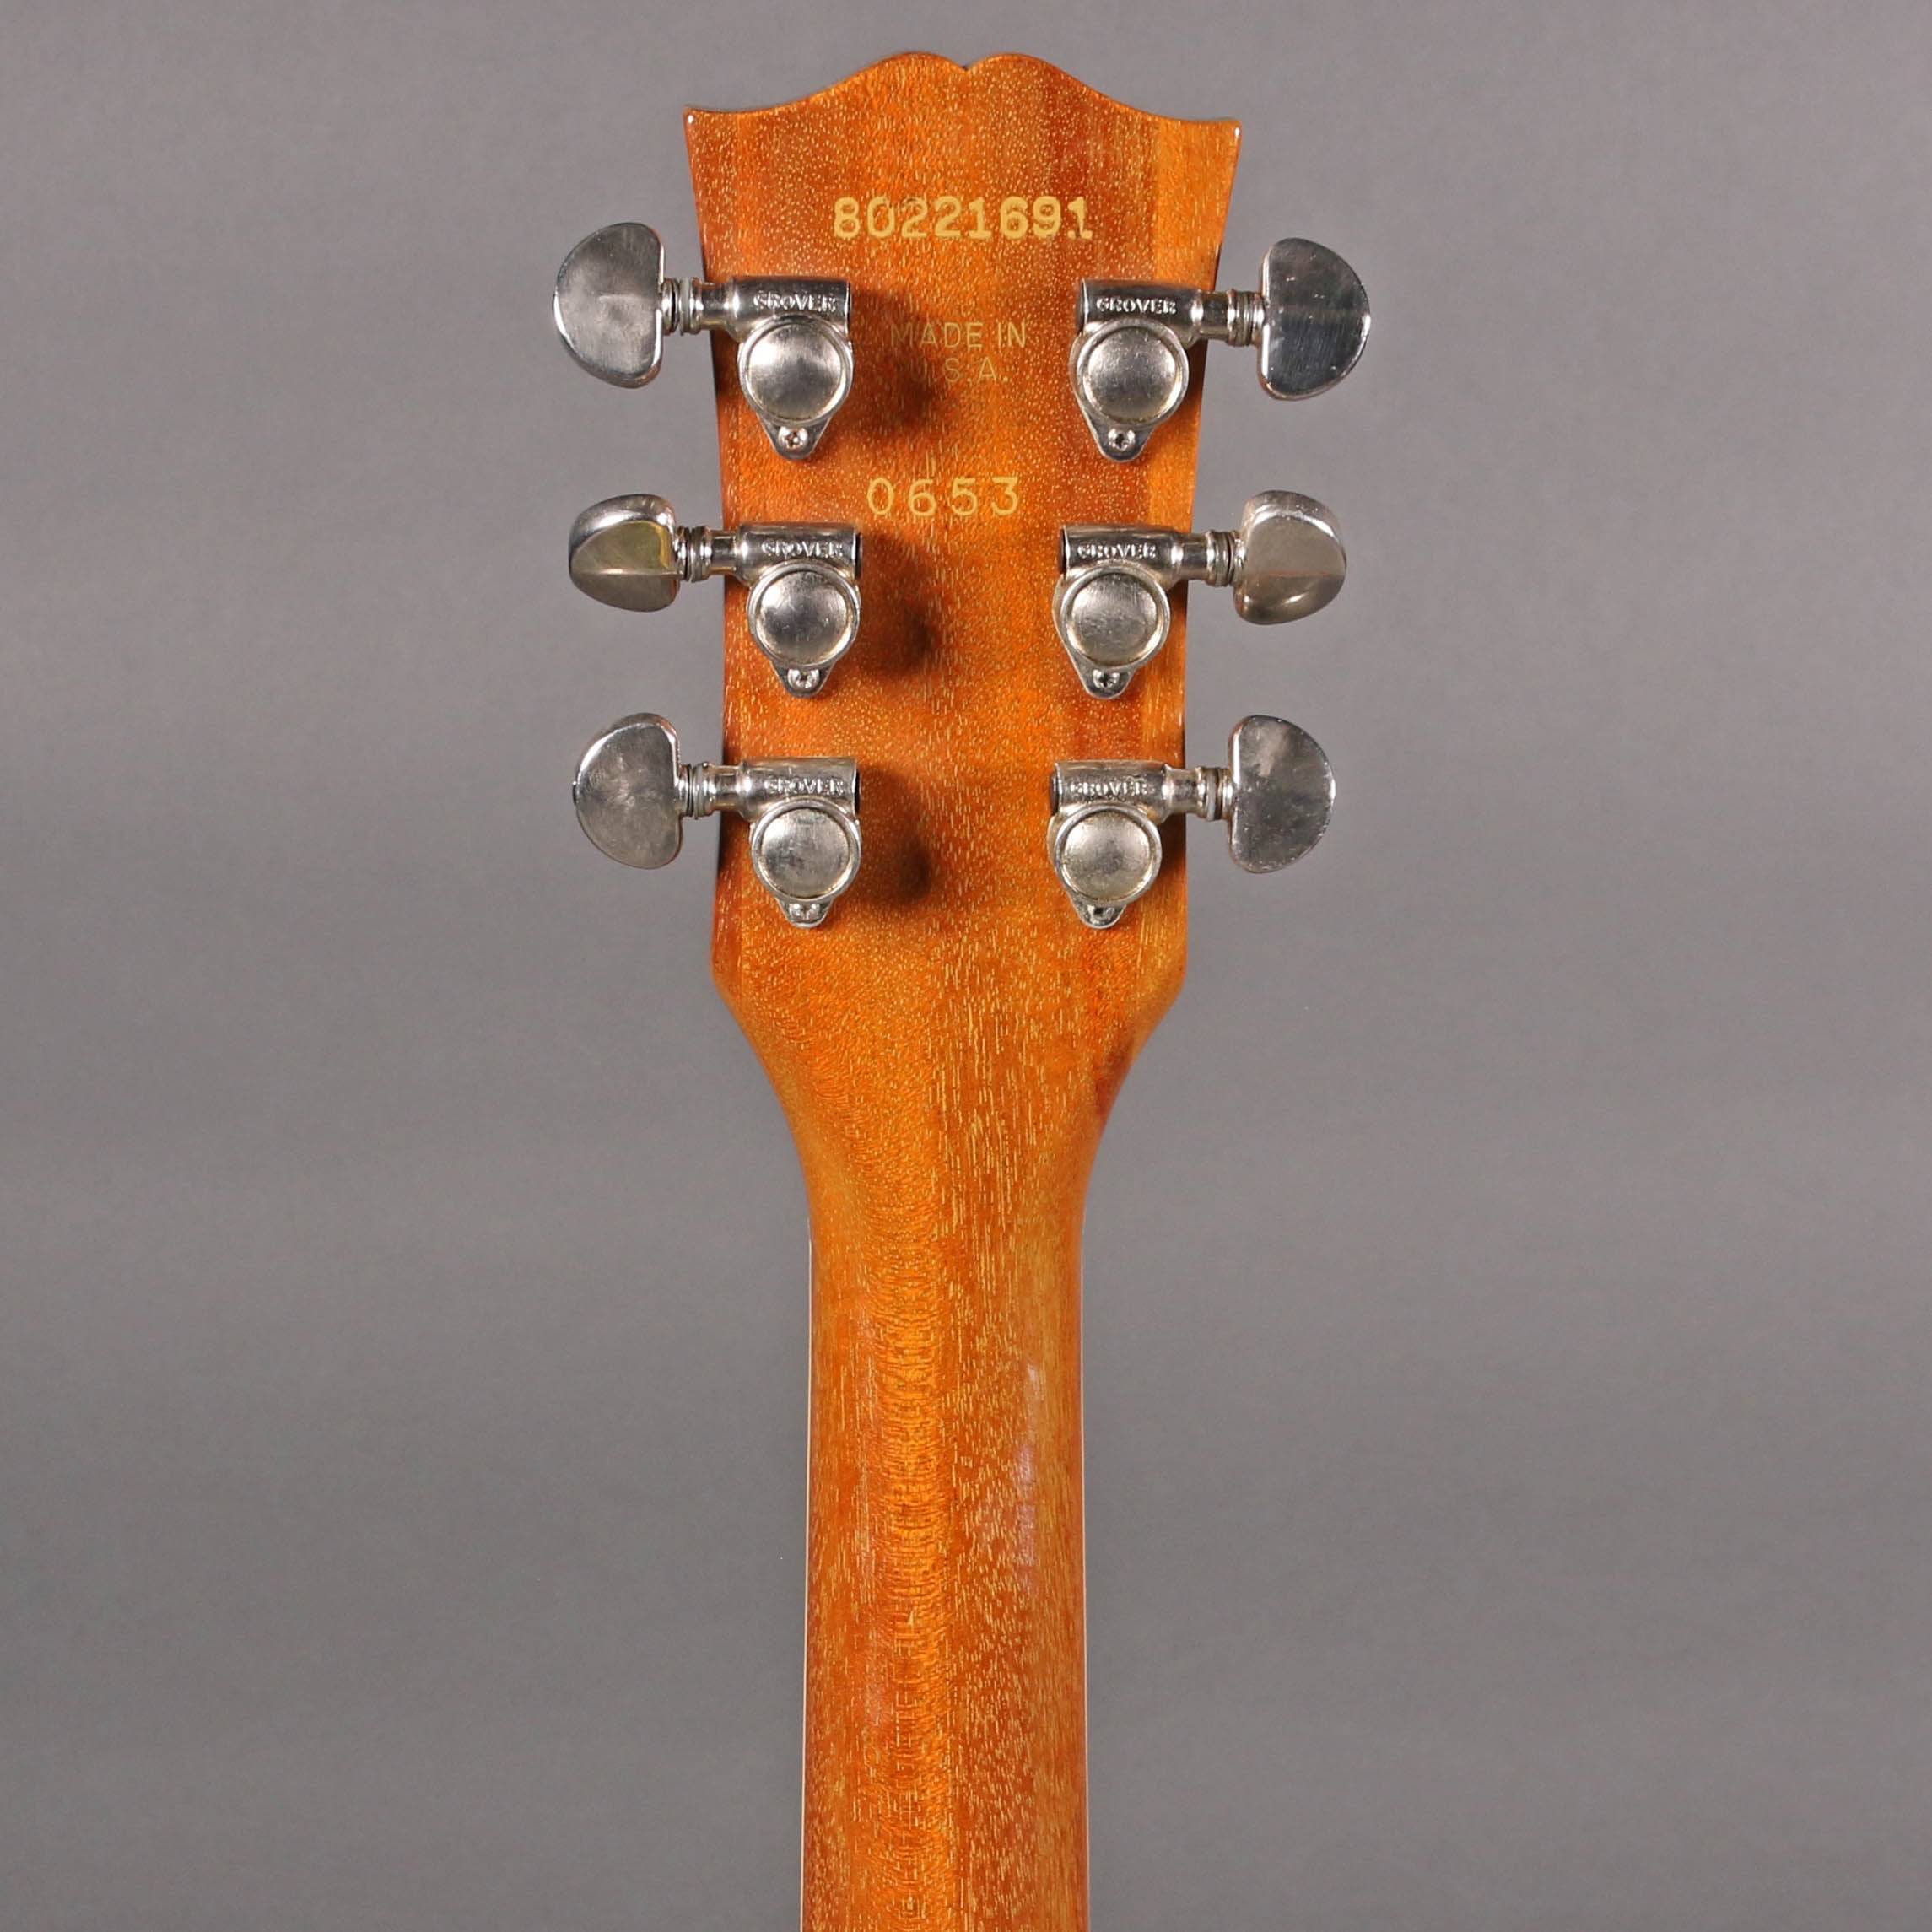 1981 Gibson Les Paul Standard Heritage 80 Elite [*Kalamazoo 